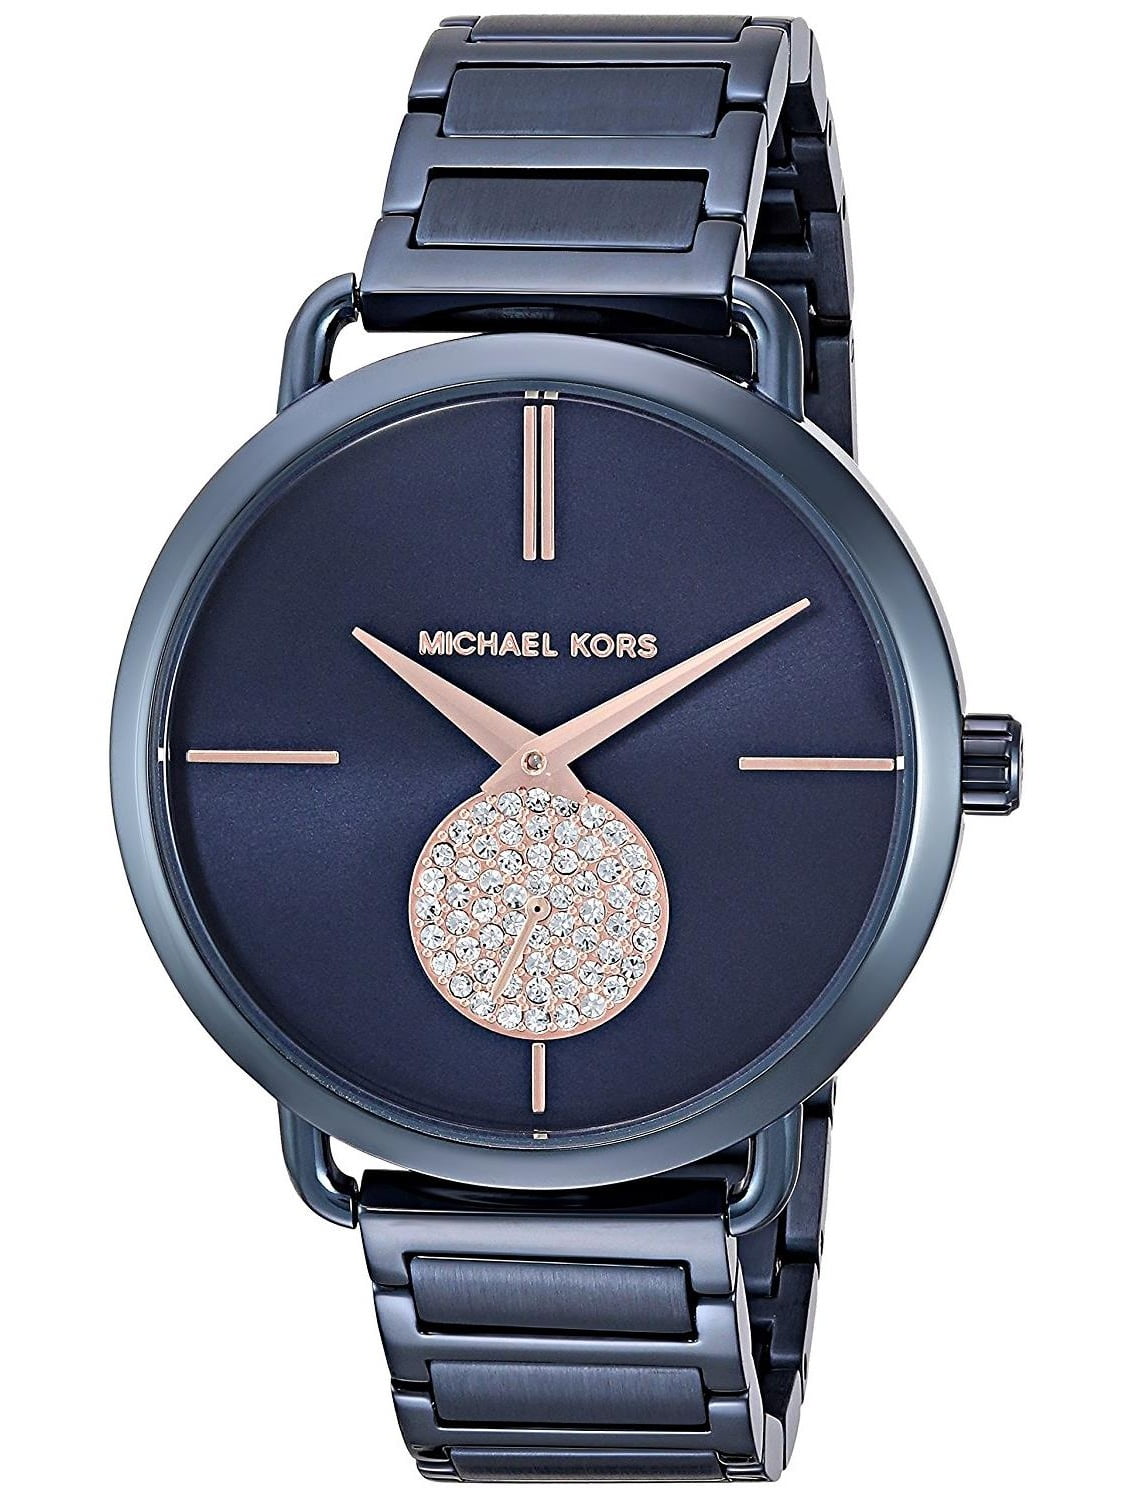 Amazoncom Michael Kors Womens Darci Blue Watch MK3417  Michael Kors  Clothing Shoes  Jewelry